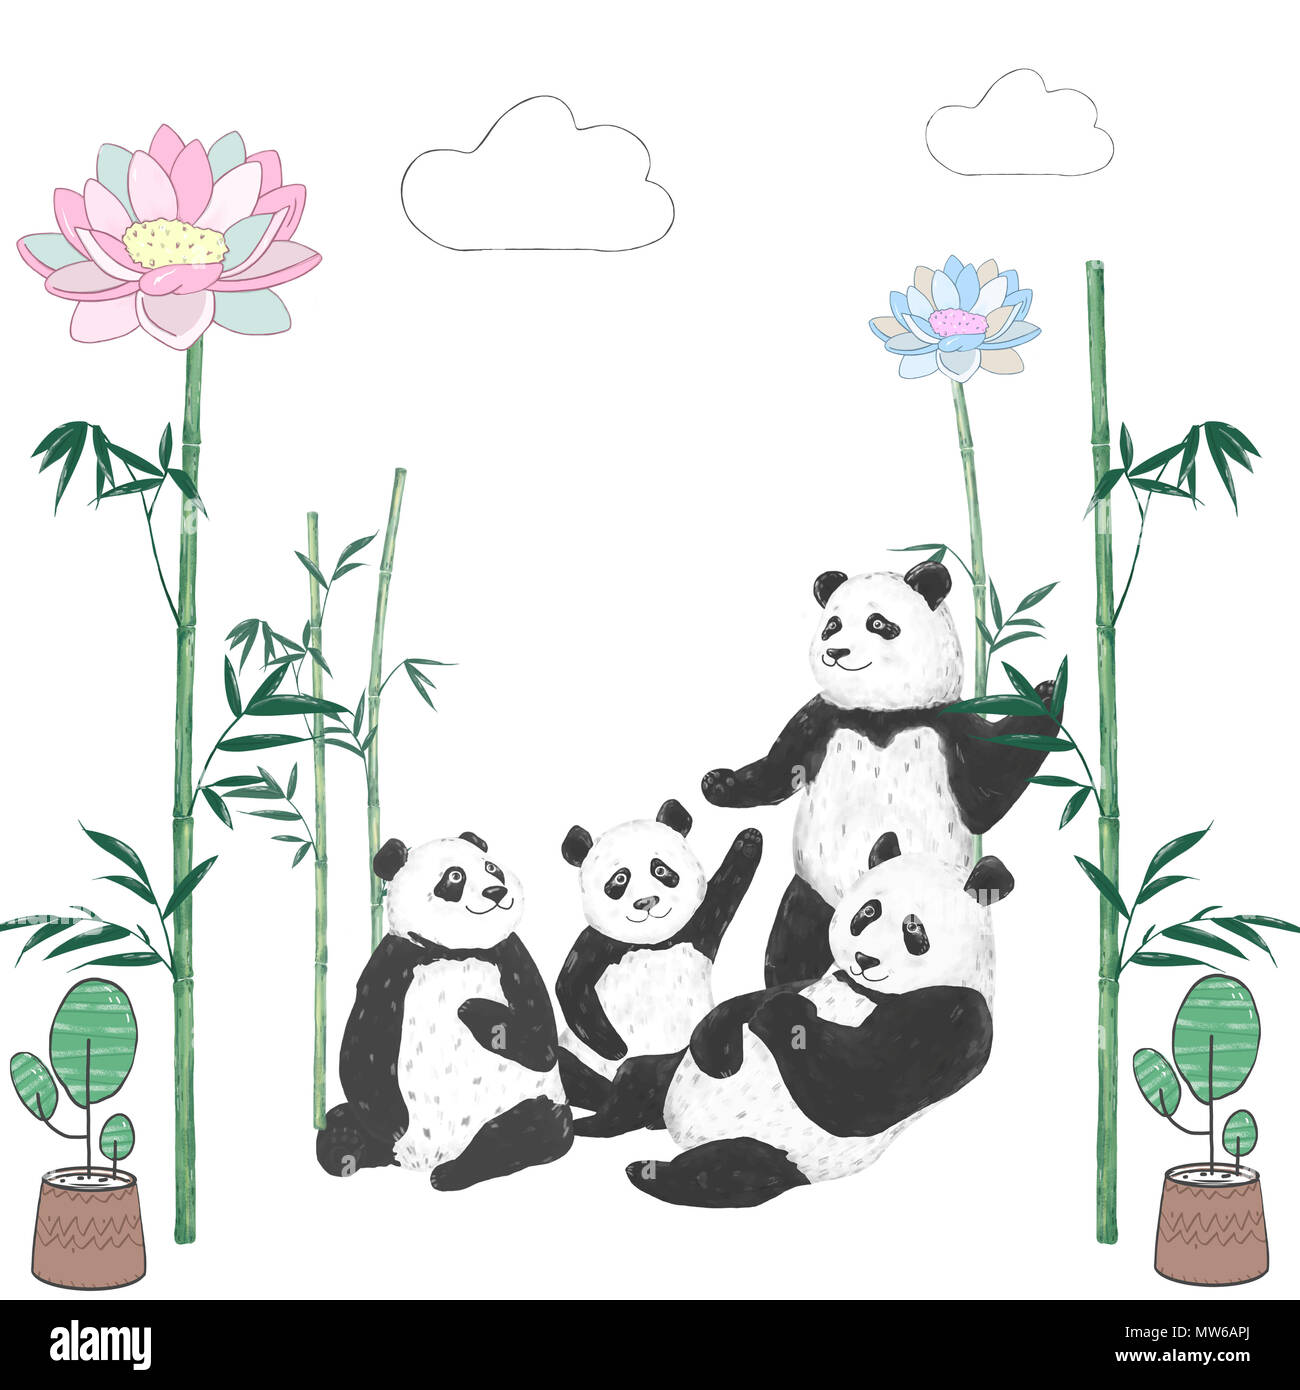 Pandas clip art drawing animals friendly beauty bamboo bears on white  background Stock Photo - Alamy